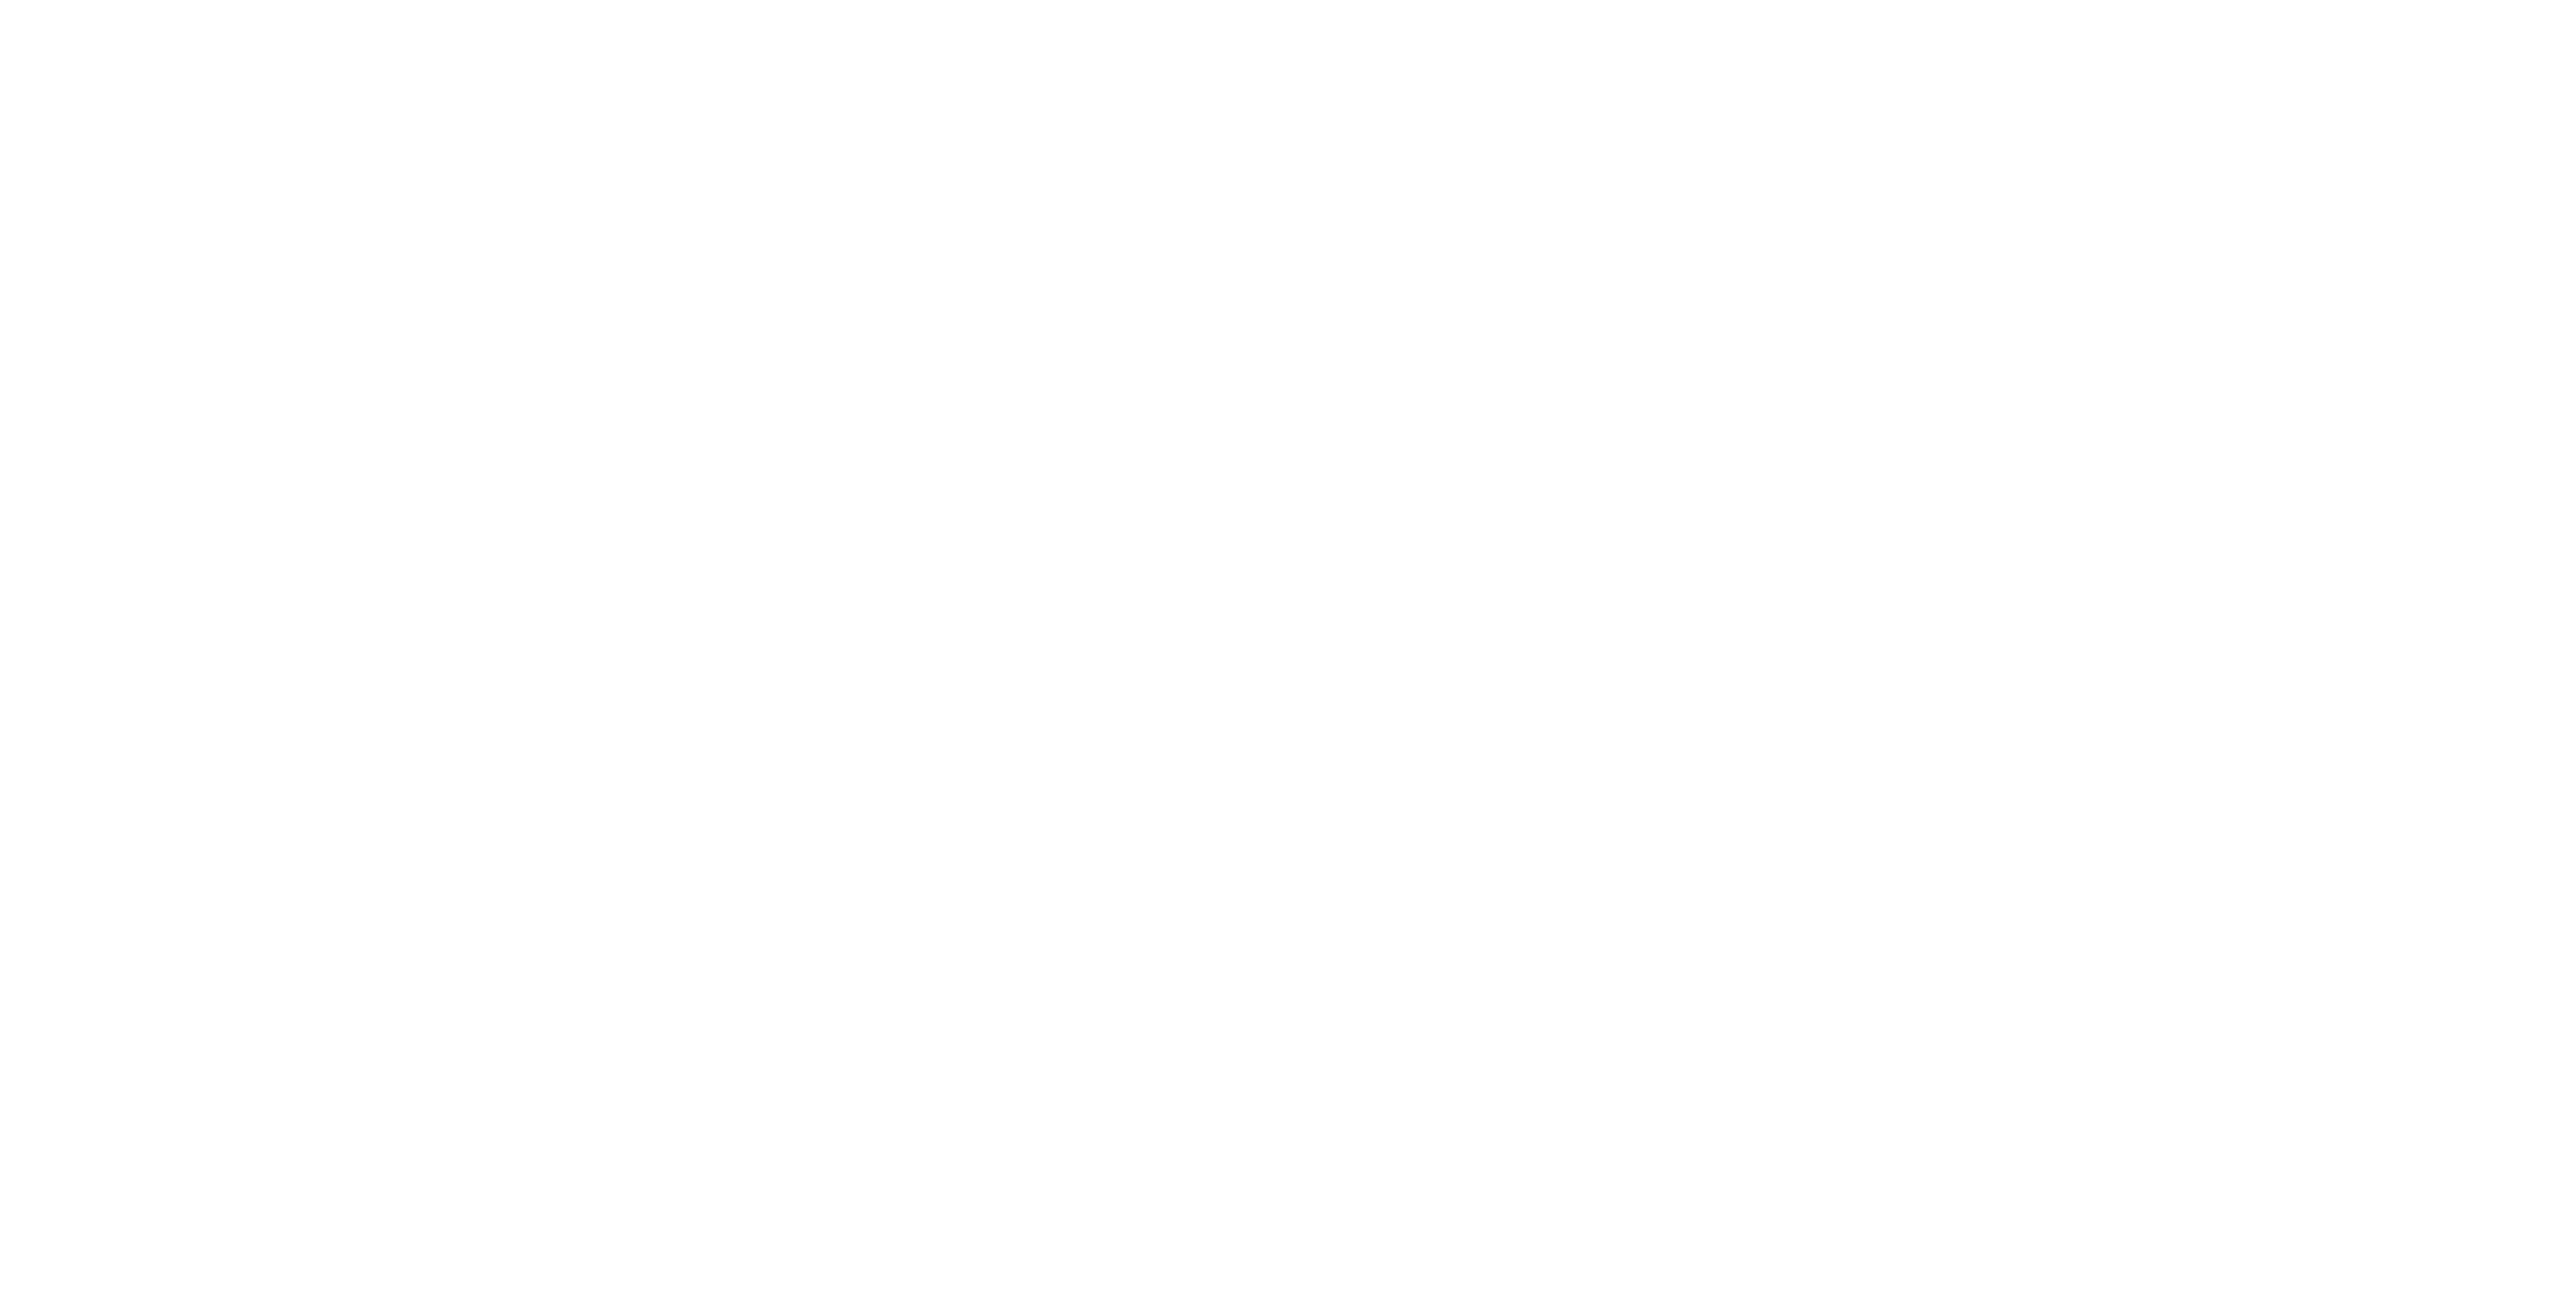 LogoCreadoenMexico-typeblanco